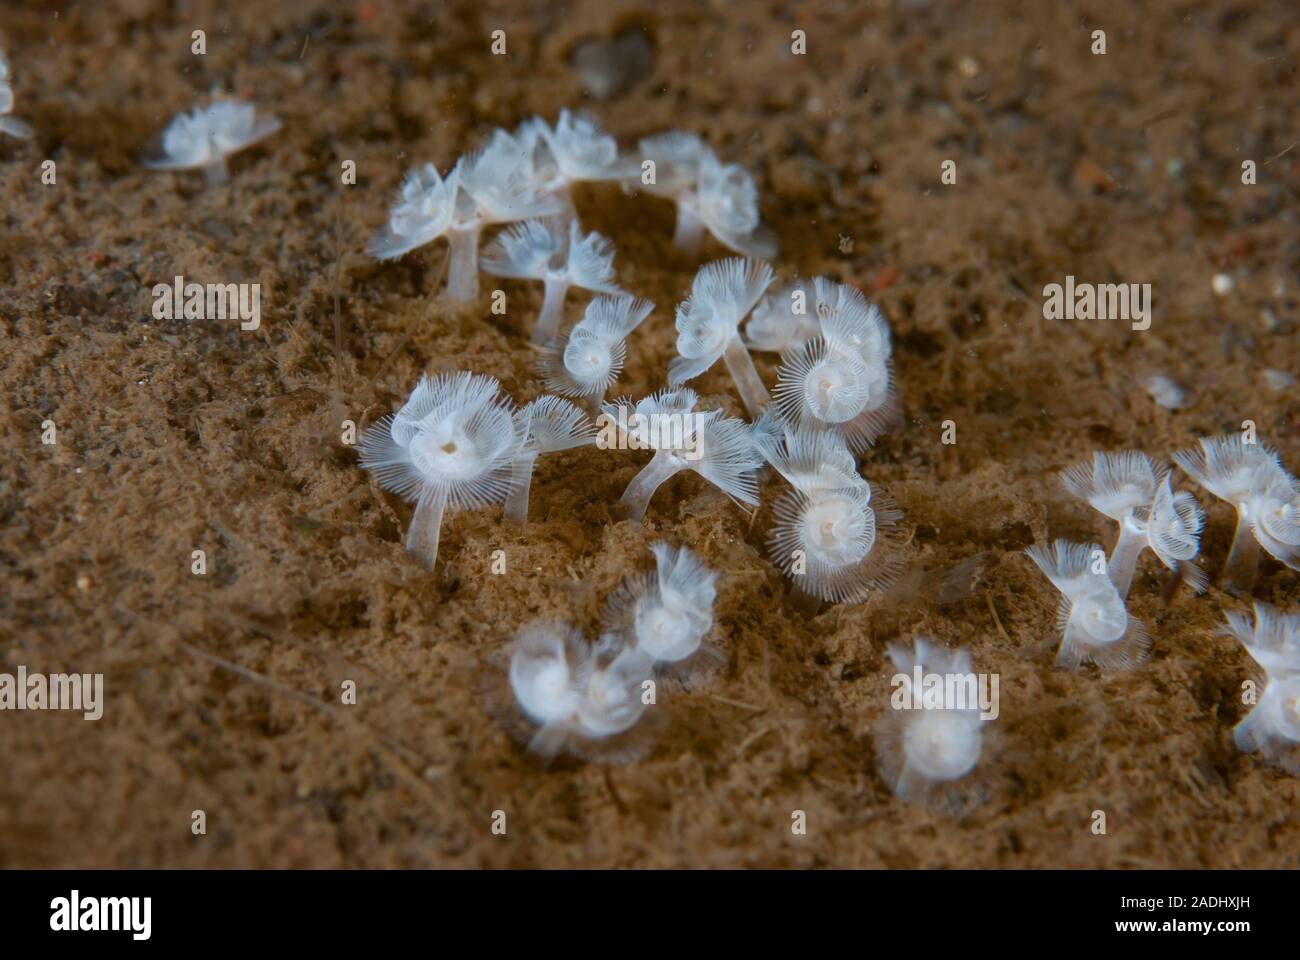 Class Polychaeta Polychaete Worms, Family Phoronidae Horseshoe Worms Stock Photo